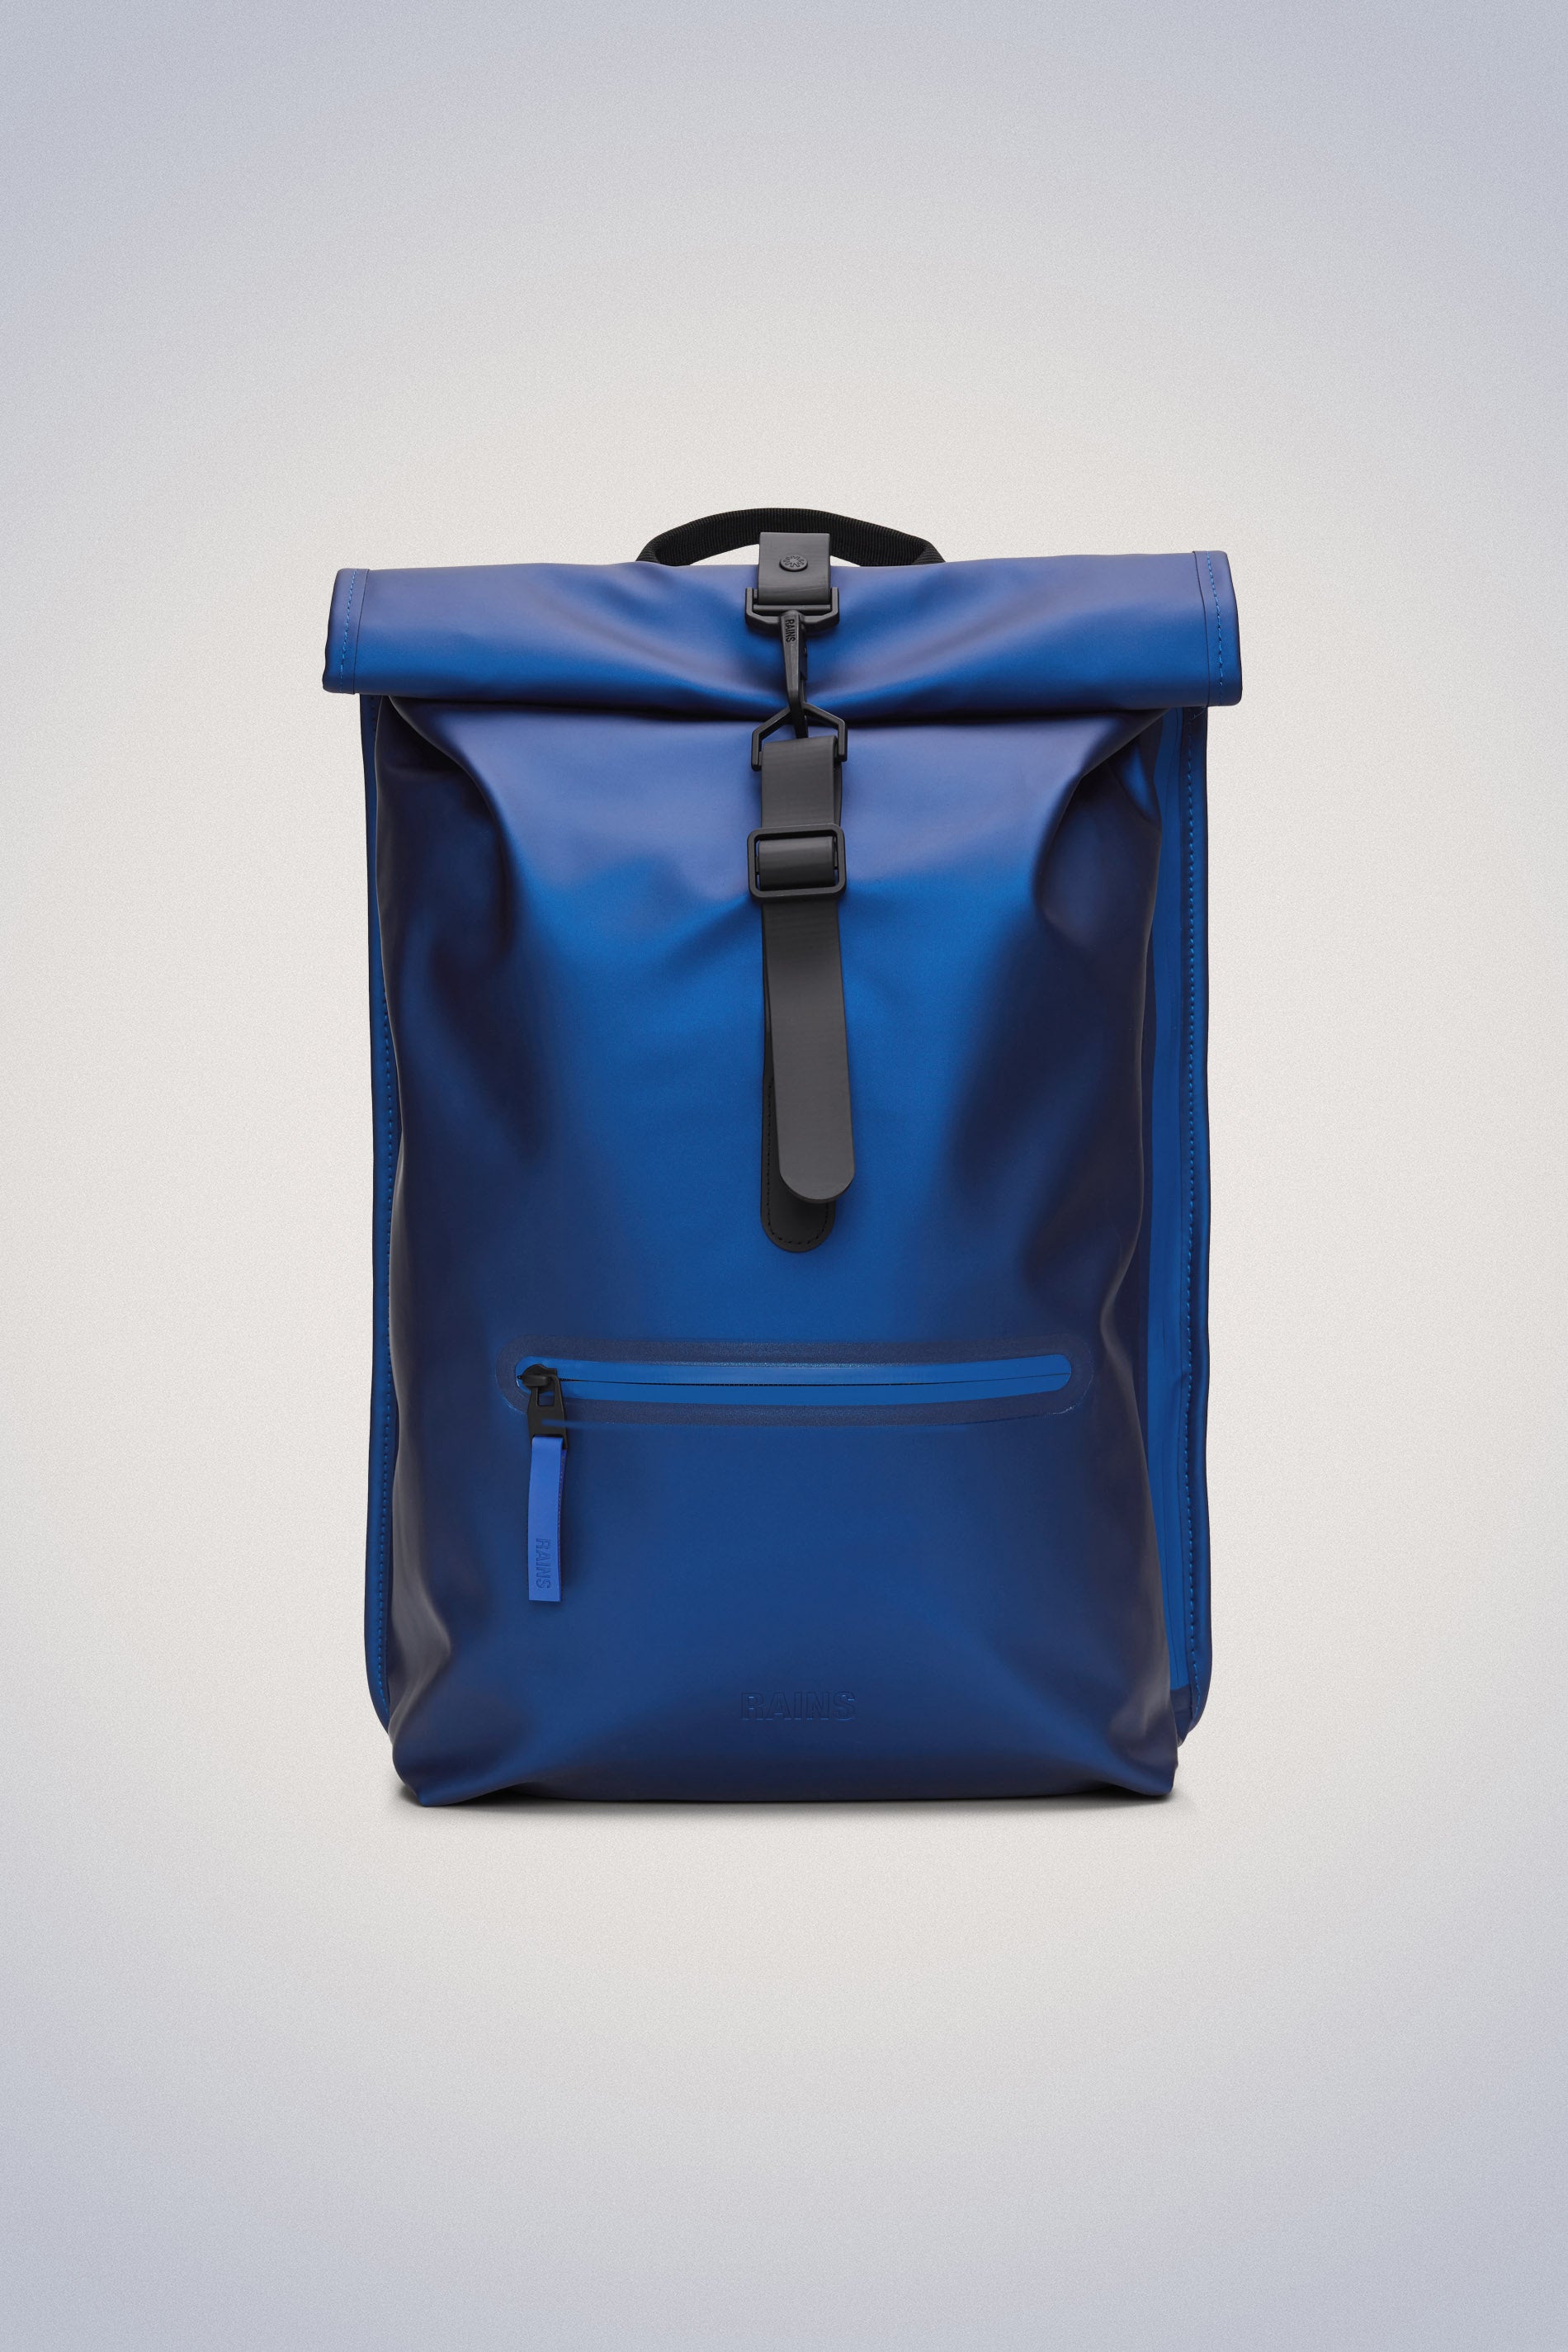 Rains(レインズ) Classic Backpack Blue 14.3Lバッグ - バッグパック ...